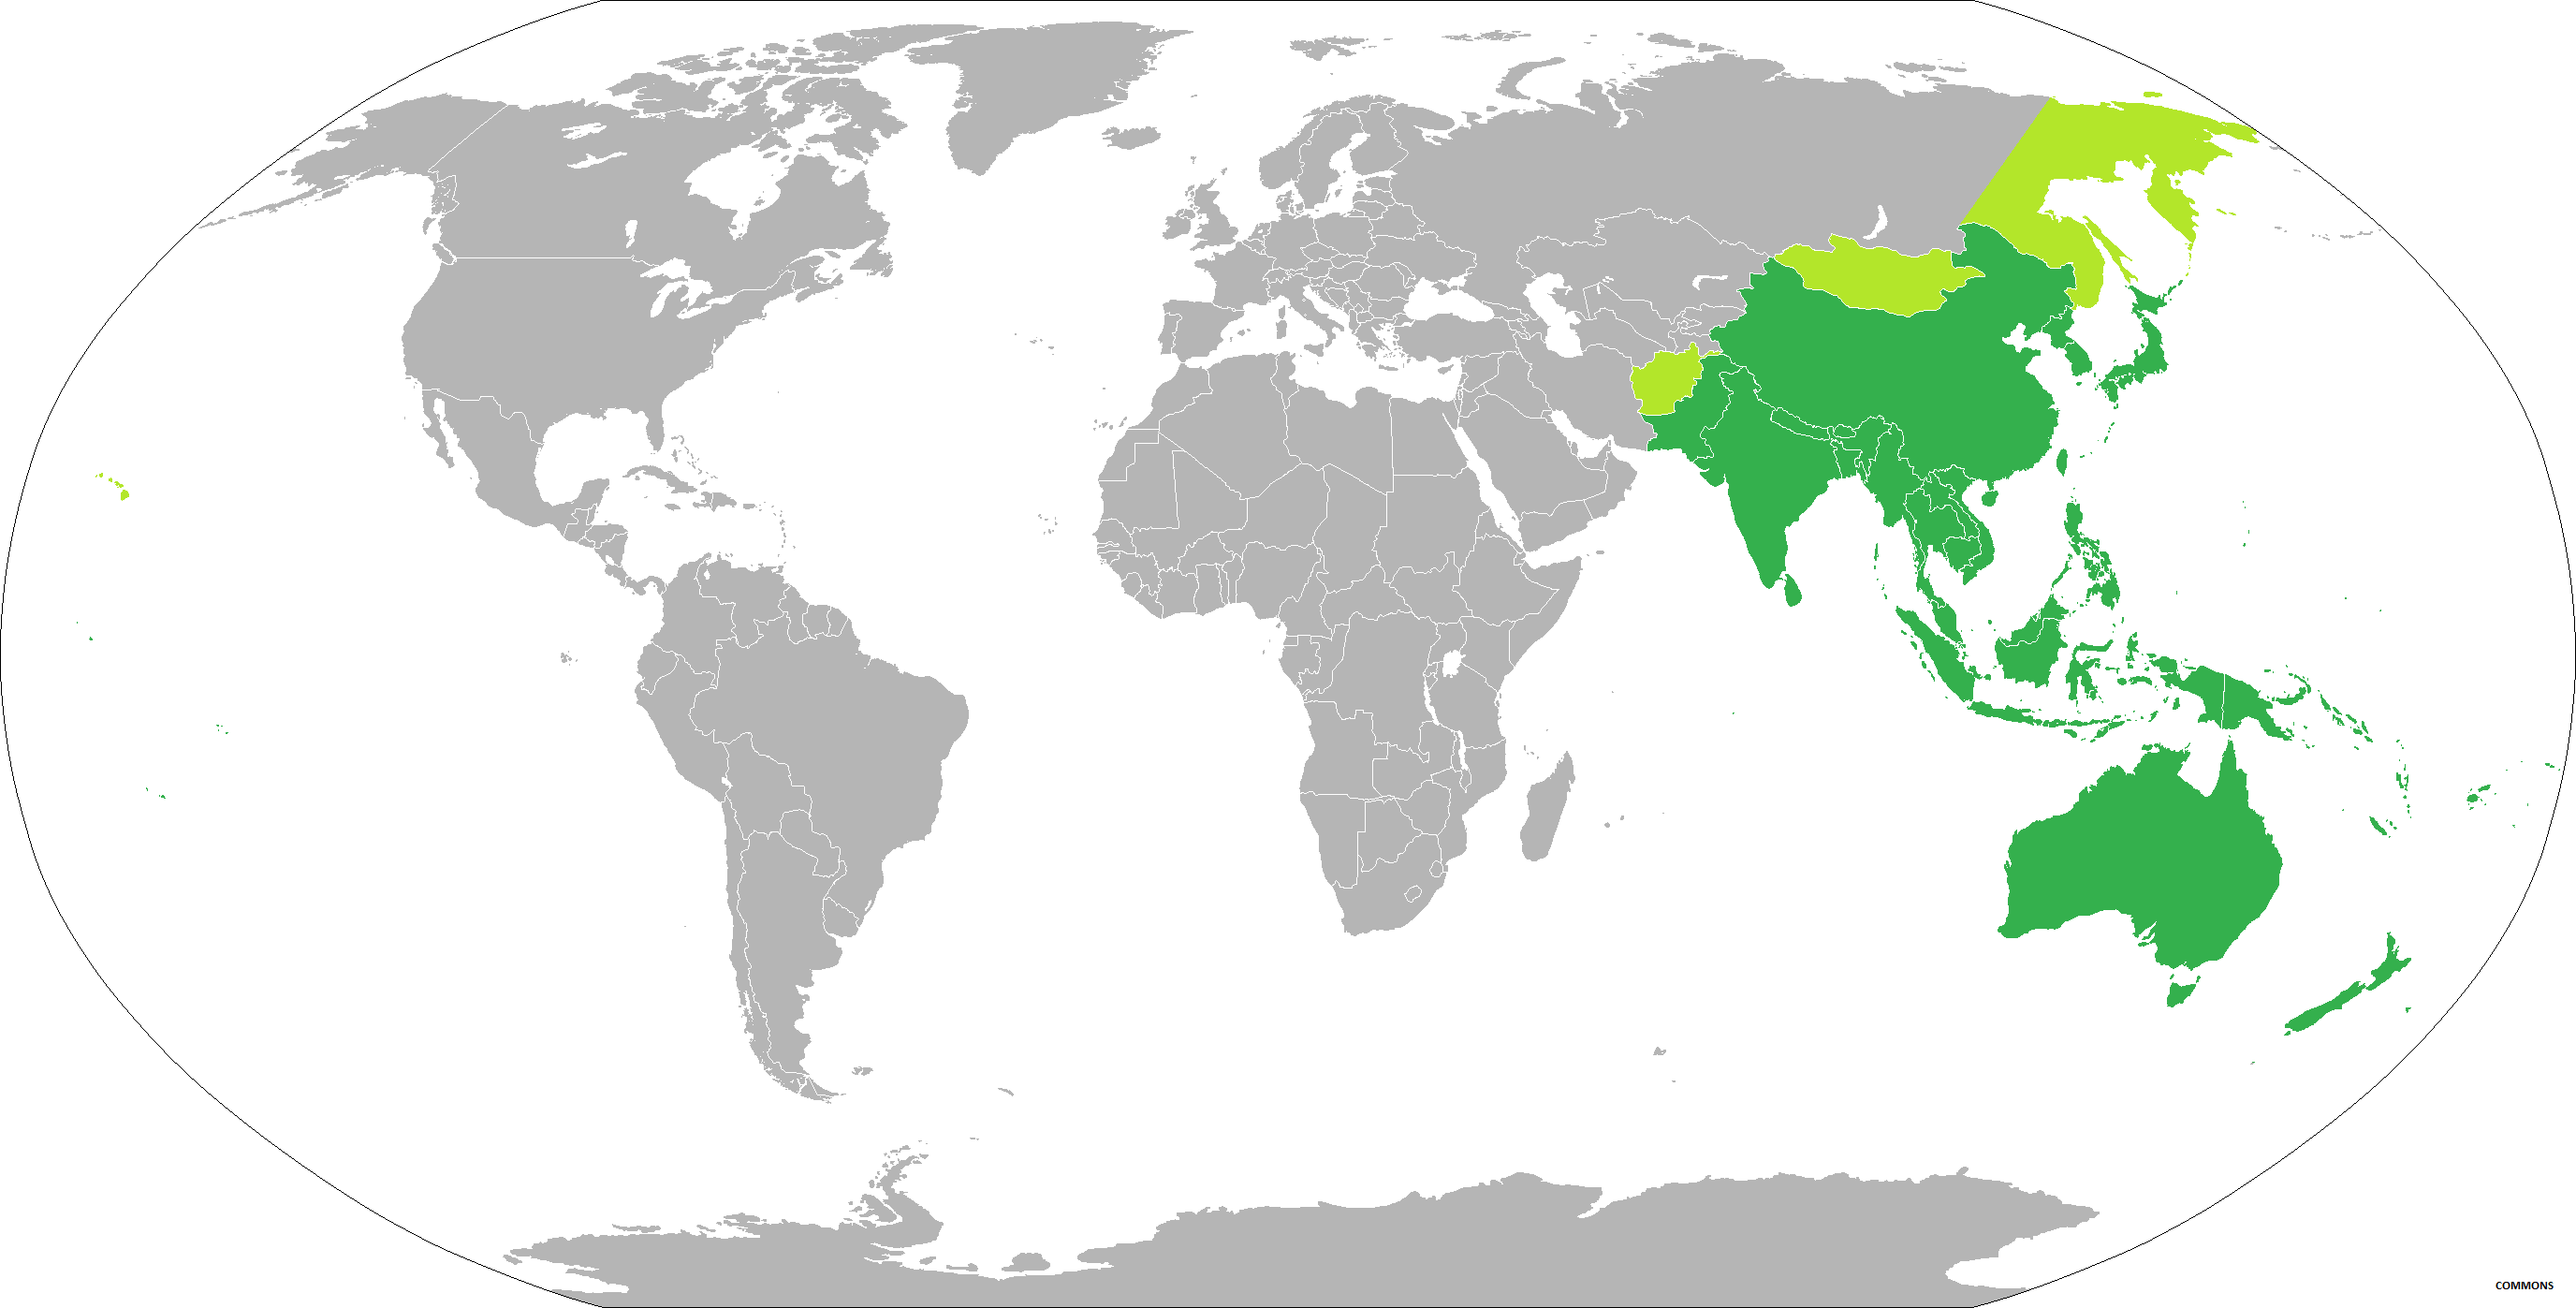 ASIA PACIFIC IN THE GLOBE